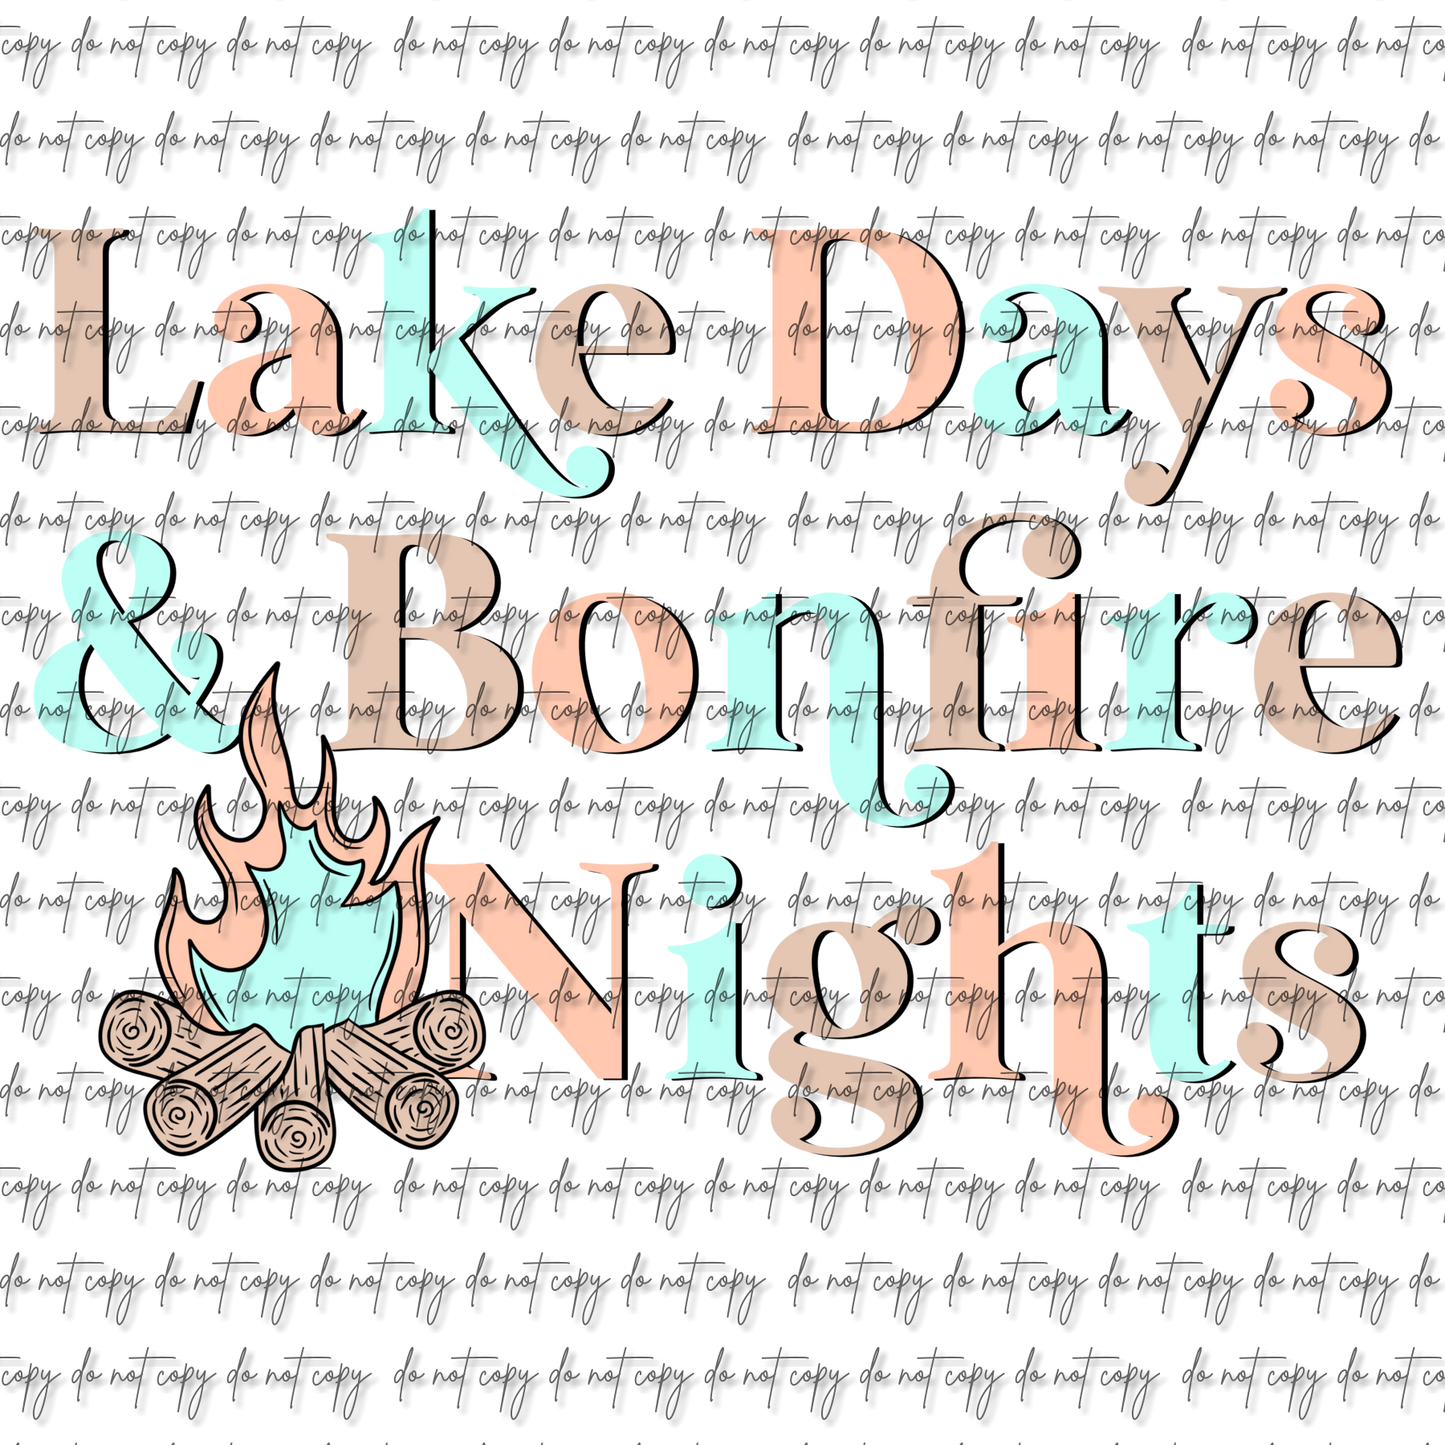 LAKE DAYS & BONFIRE NIGHTS DTF